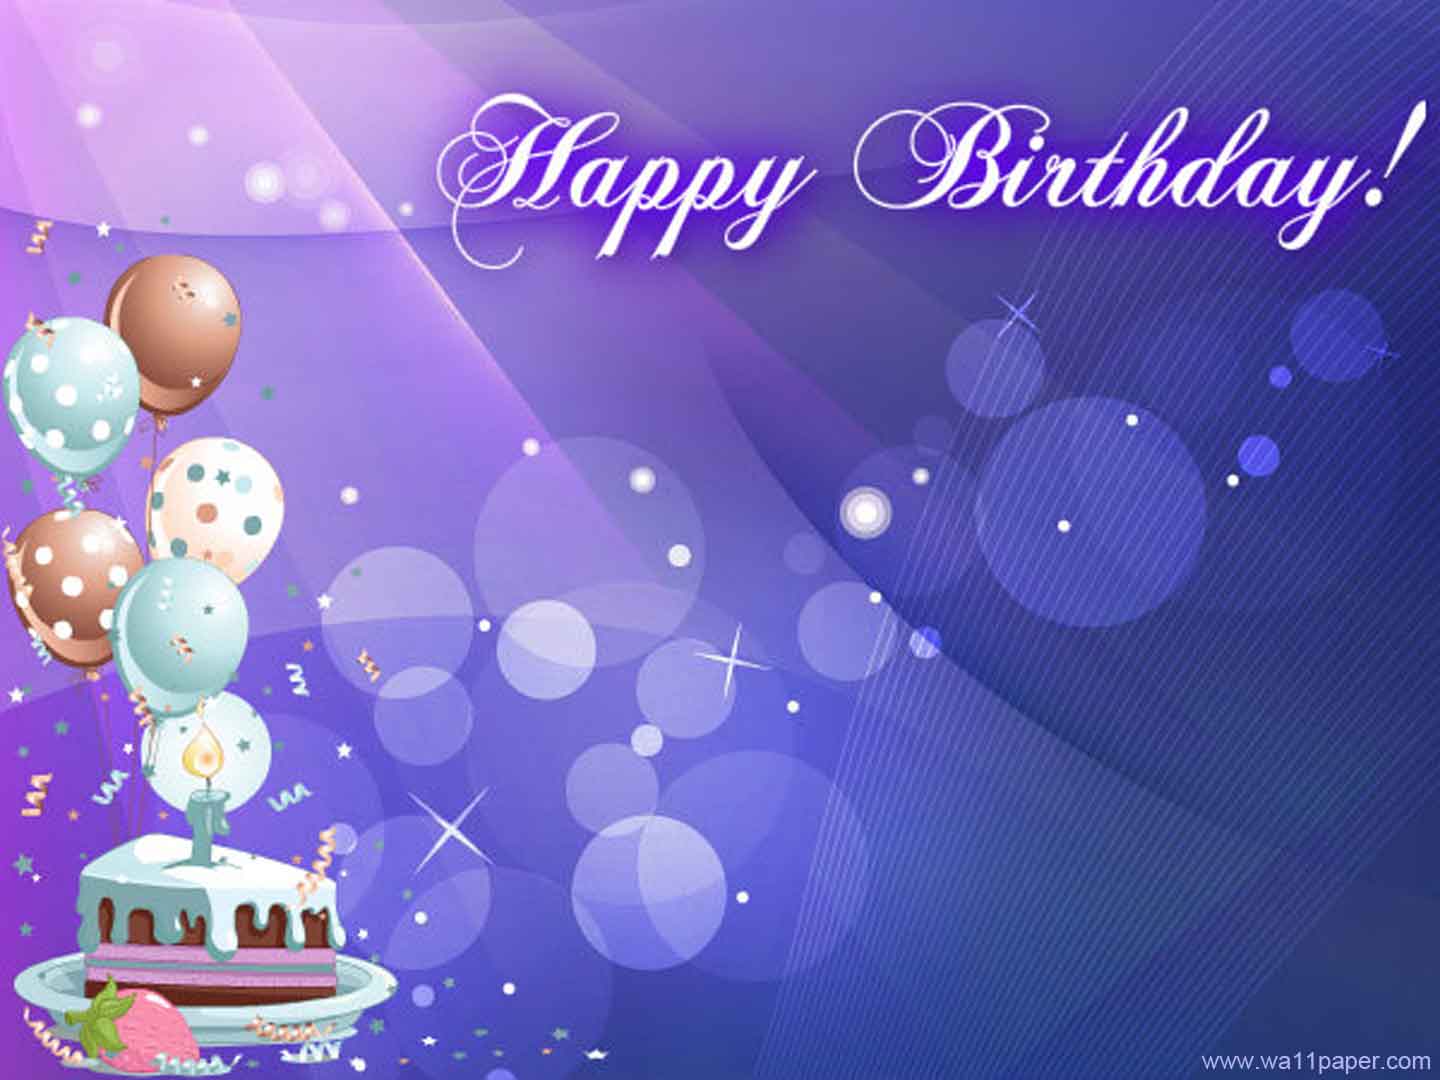 Happy Birthday Background Images